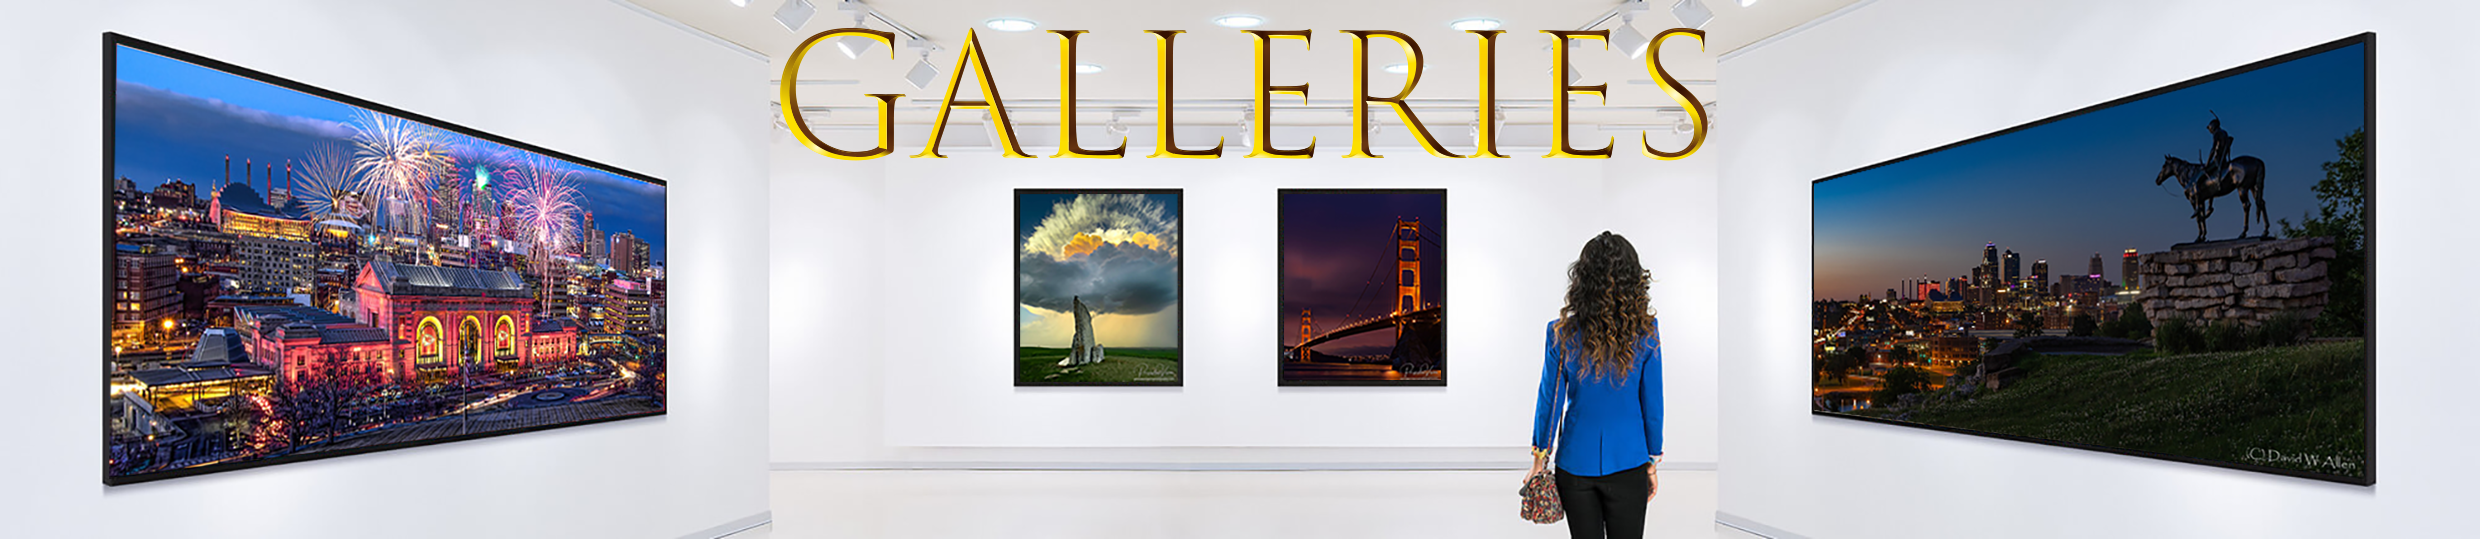 Galleries page header image